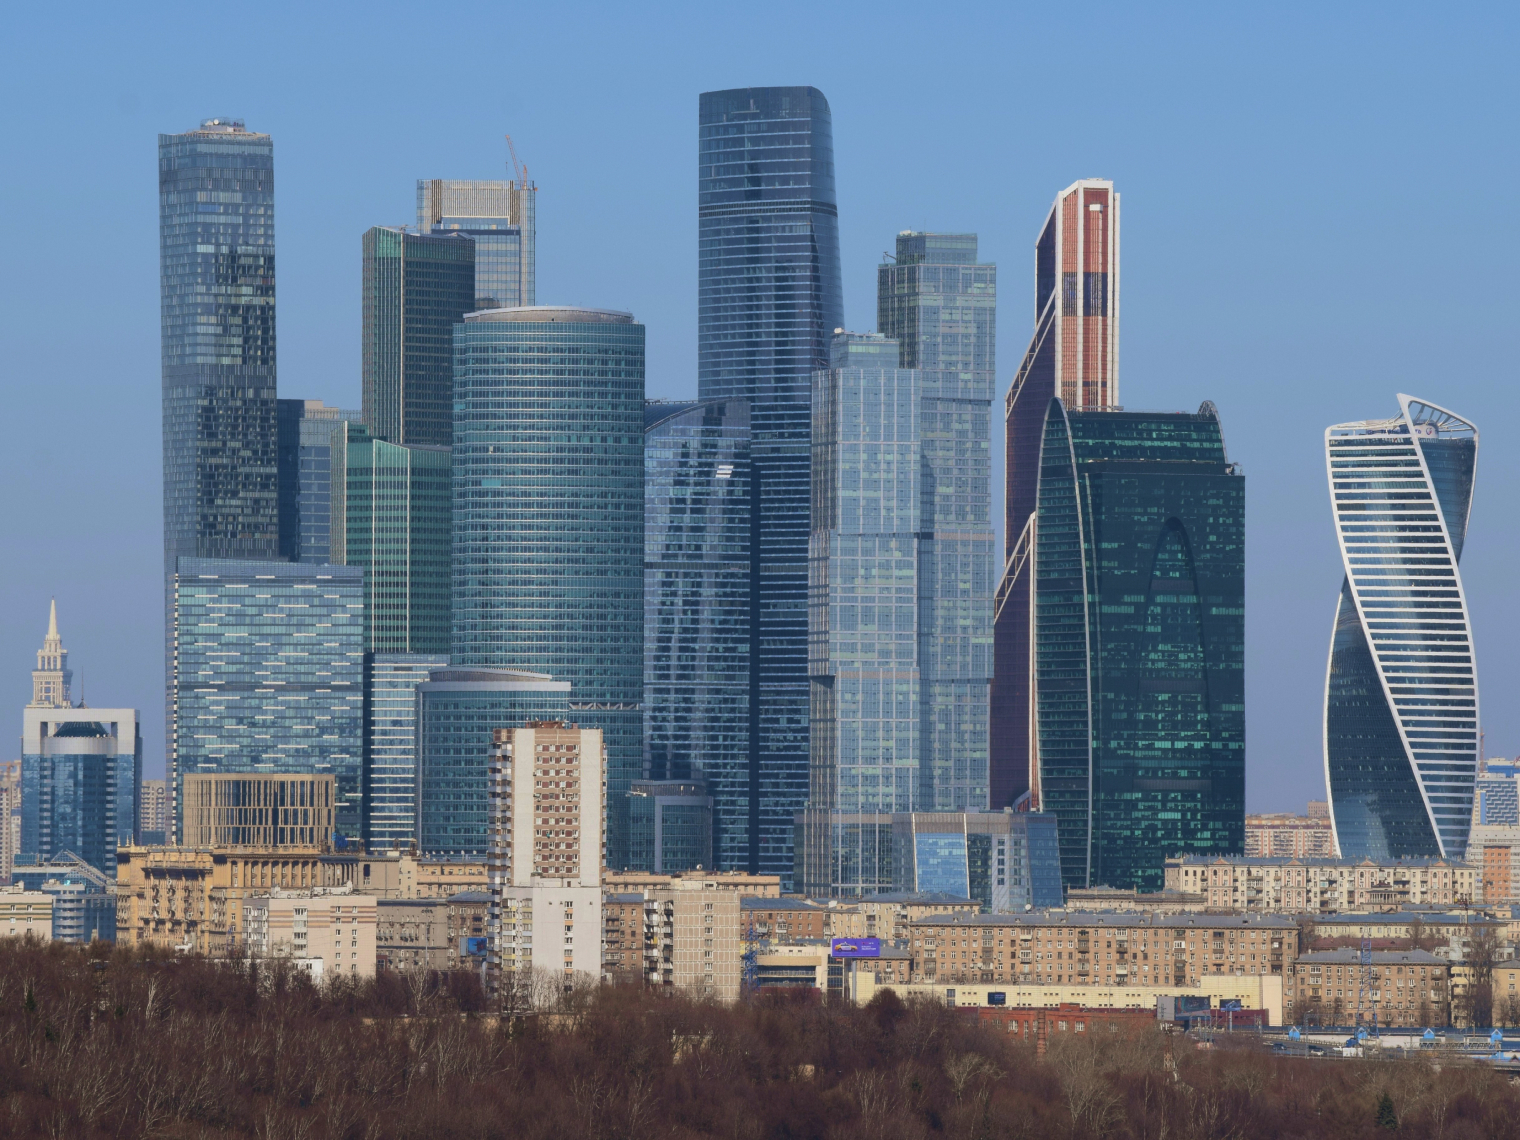 Москва-Сити, строится с 1996 года © Dzasohovich / WikiCommons